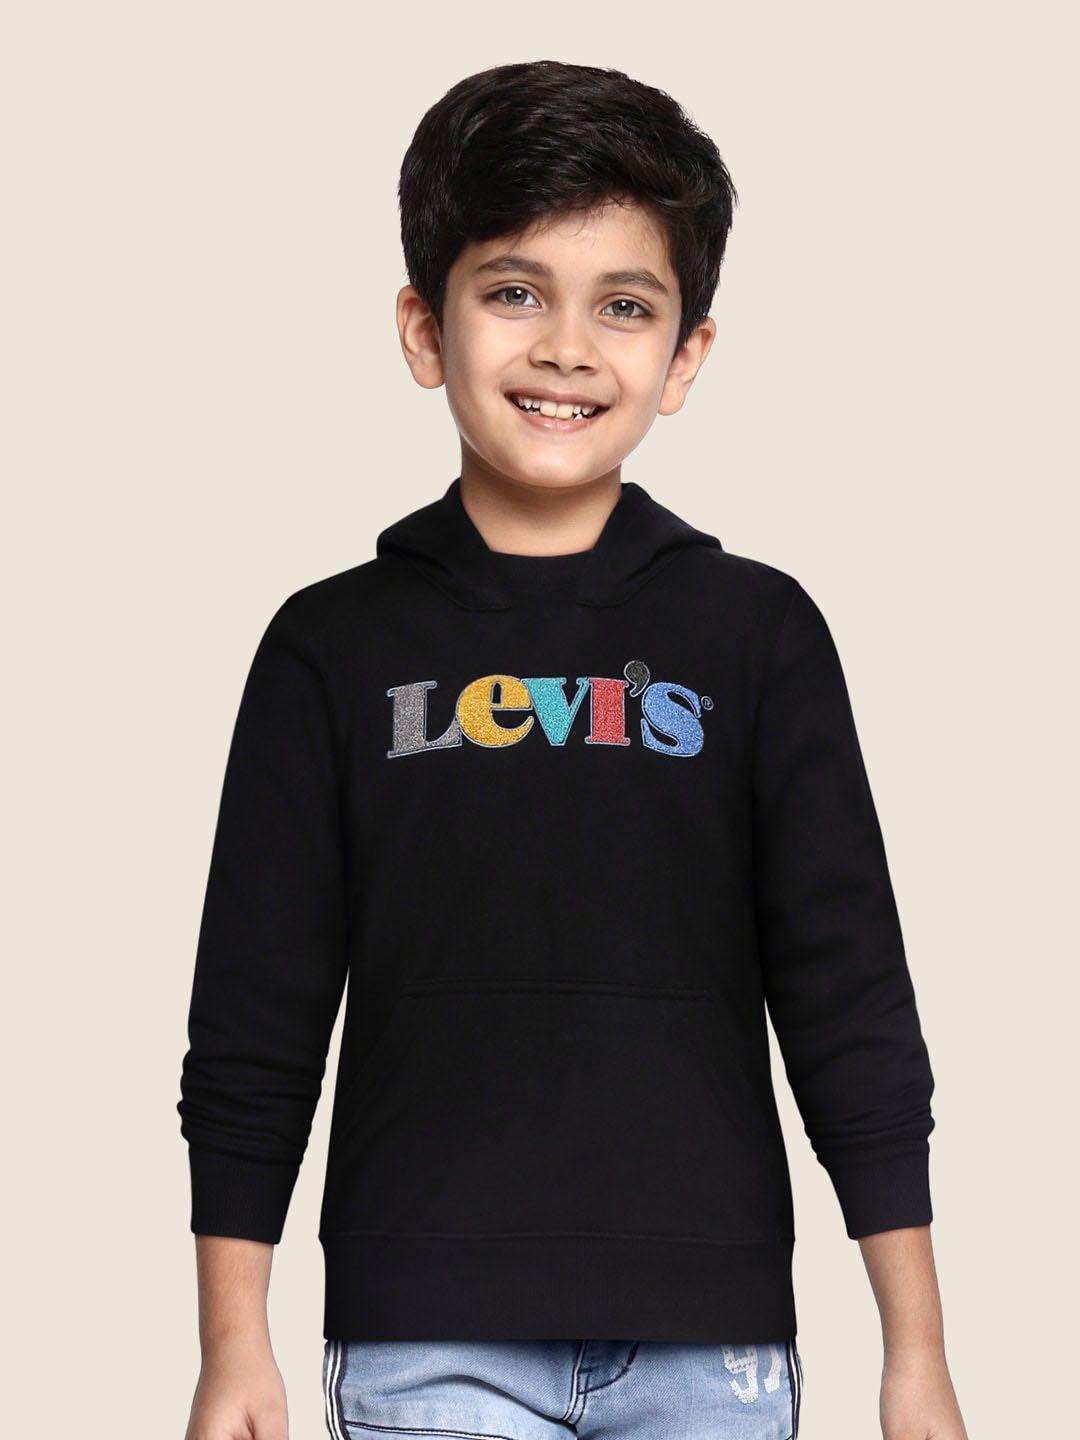 levis-boys-black-printed-sweatshirt